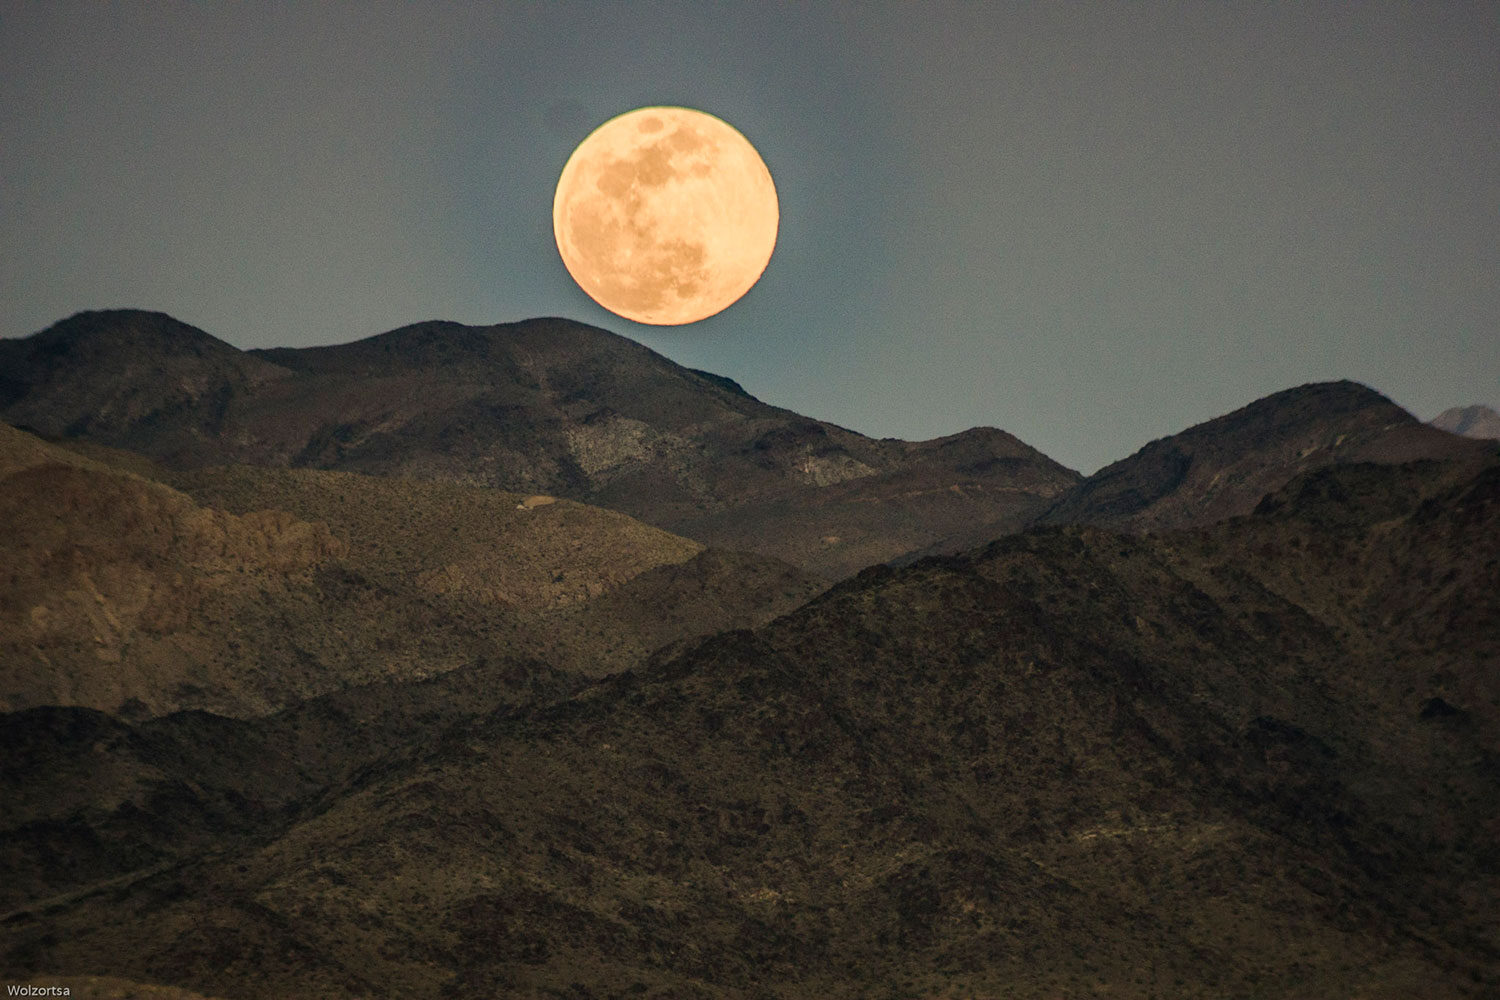 Moon rise cresting a desert mountain range.